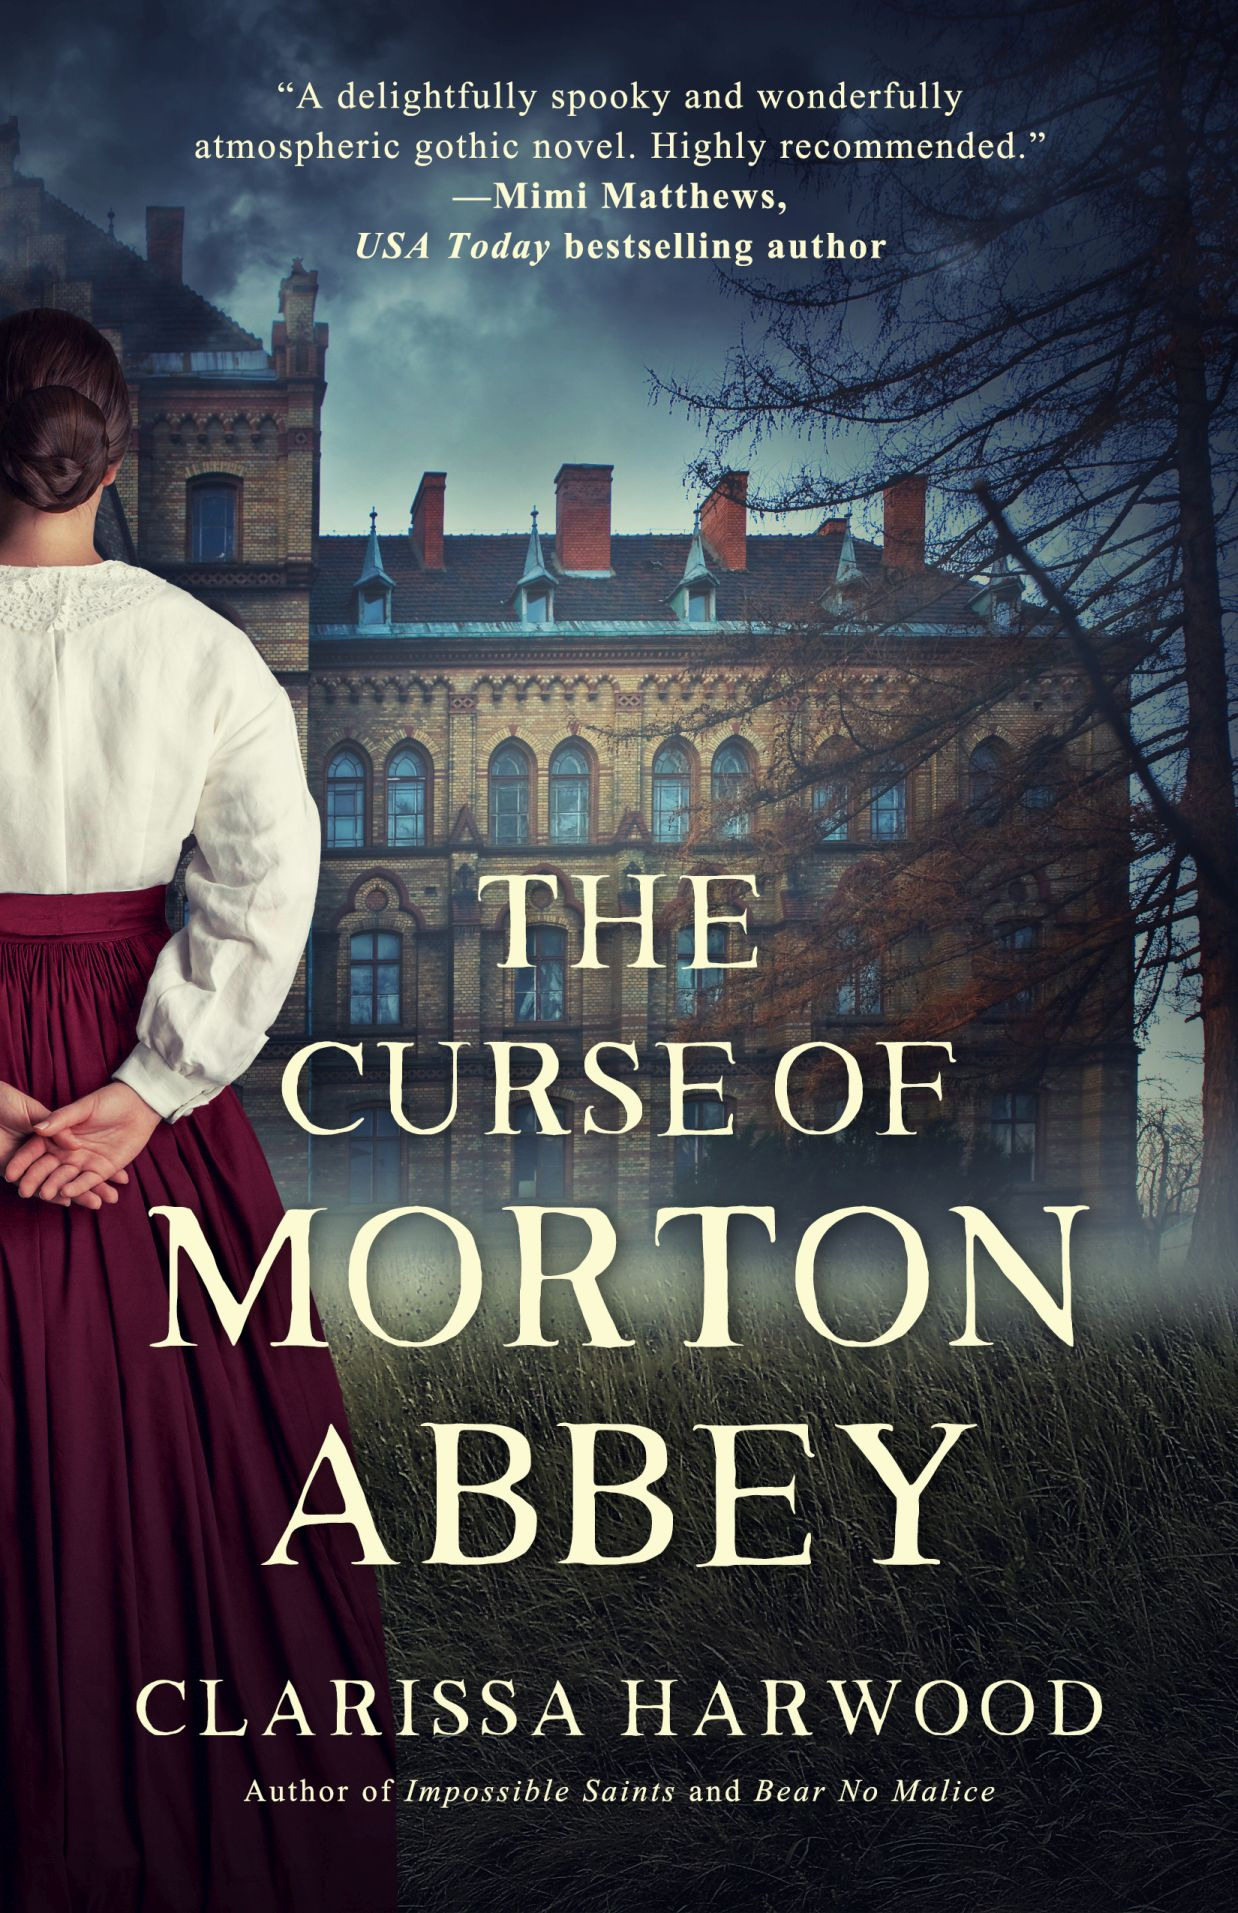 Gothic historical novel The Curse of Morton Abbey reaches #2 on Amazon Bestseller List